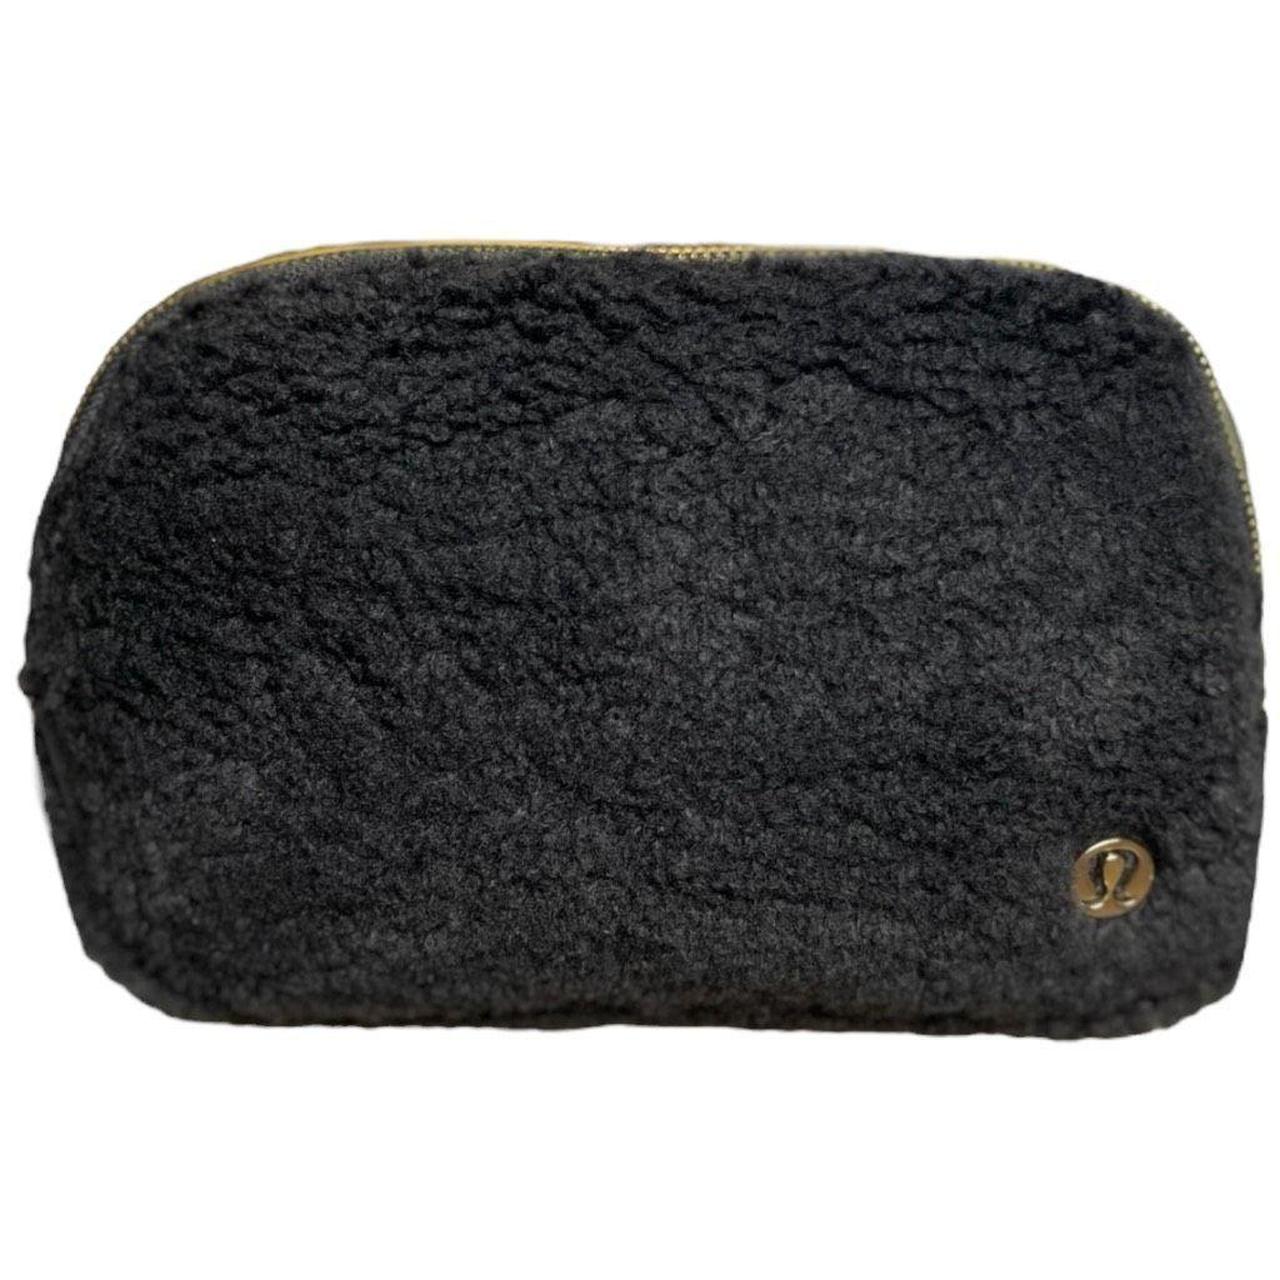 black sherpa lululemon fanny pack with gold - Depop